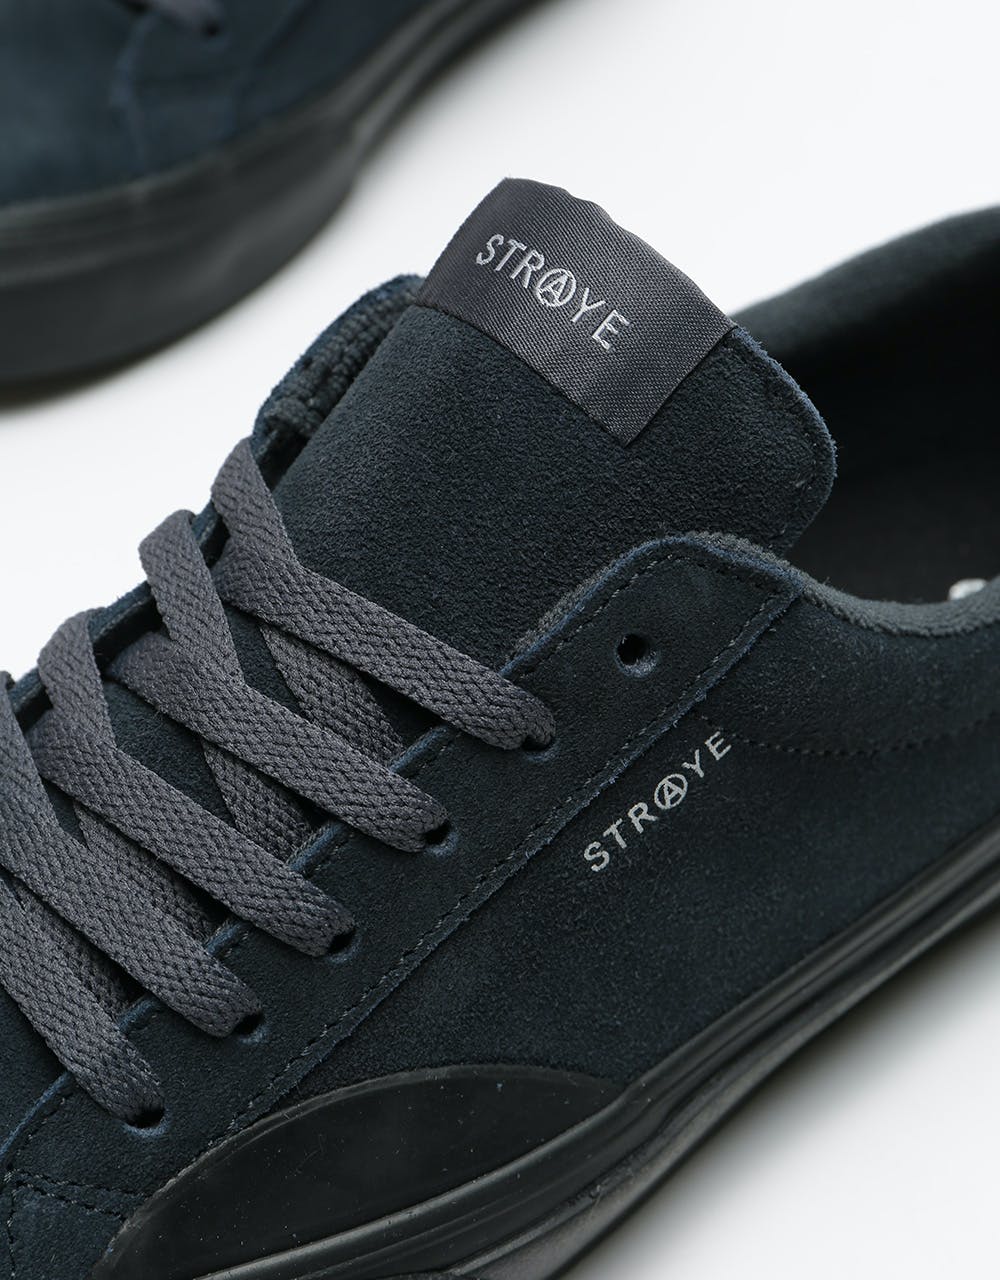 Straye Logan Skate Shoes - Carbon Suede